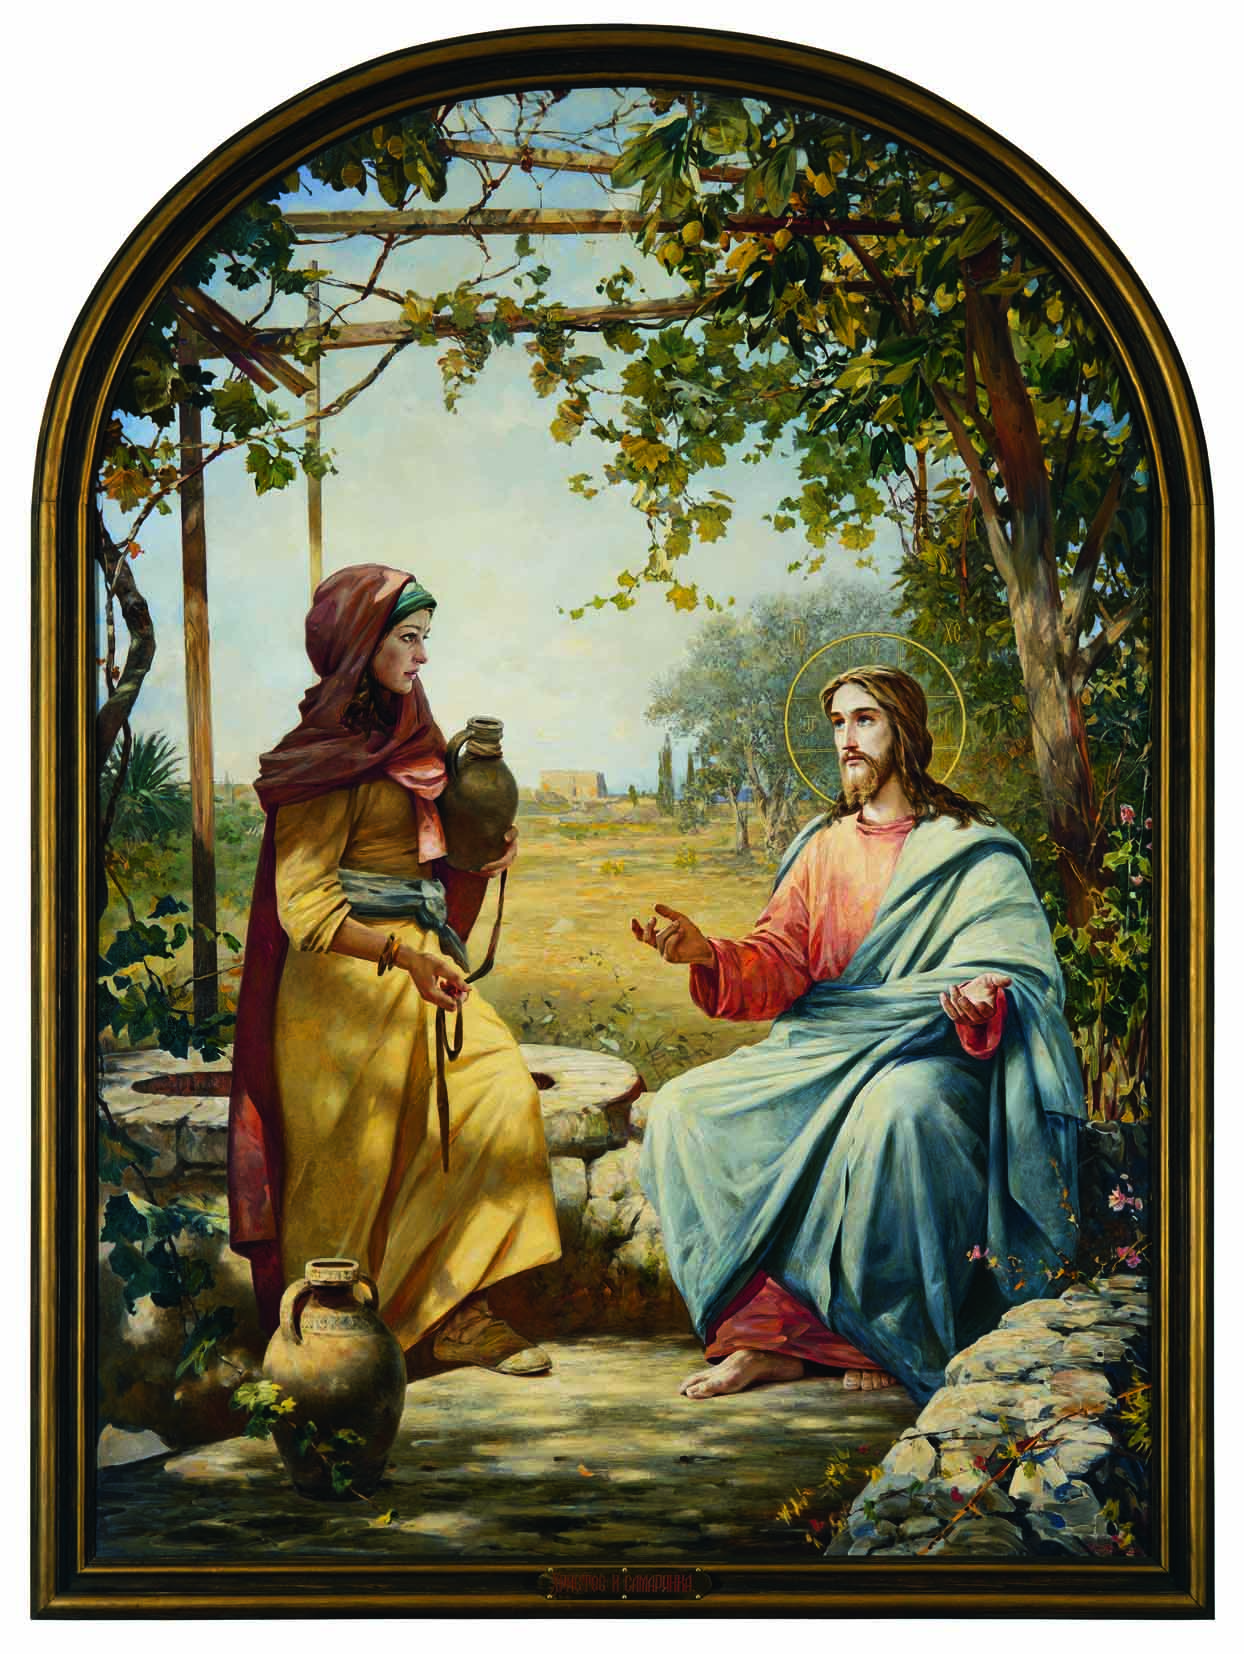 Христос и самарянка. Иисус Христос и самарянка у колодца. "Христос и самарянка" Верещагина. Встреча Иисуса Христа с самарянкой у колодца.